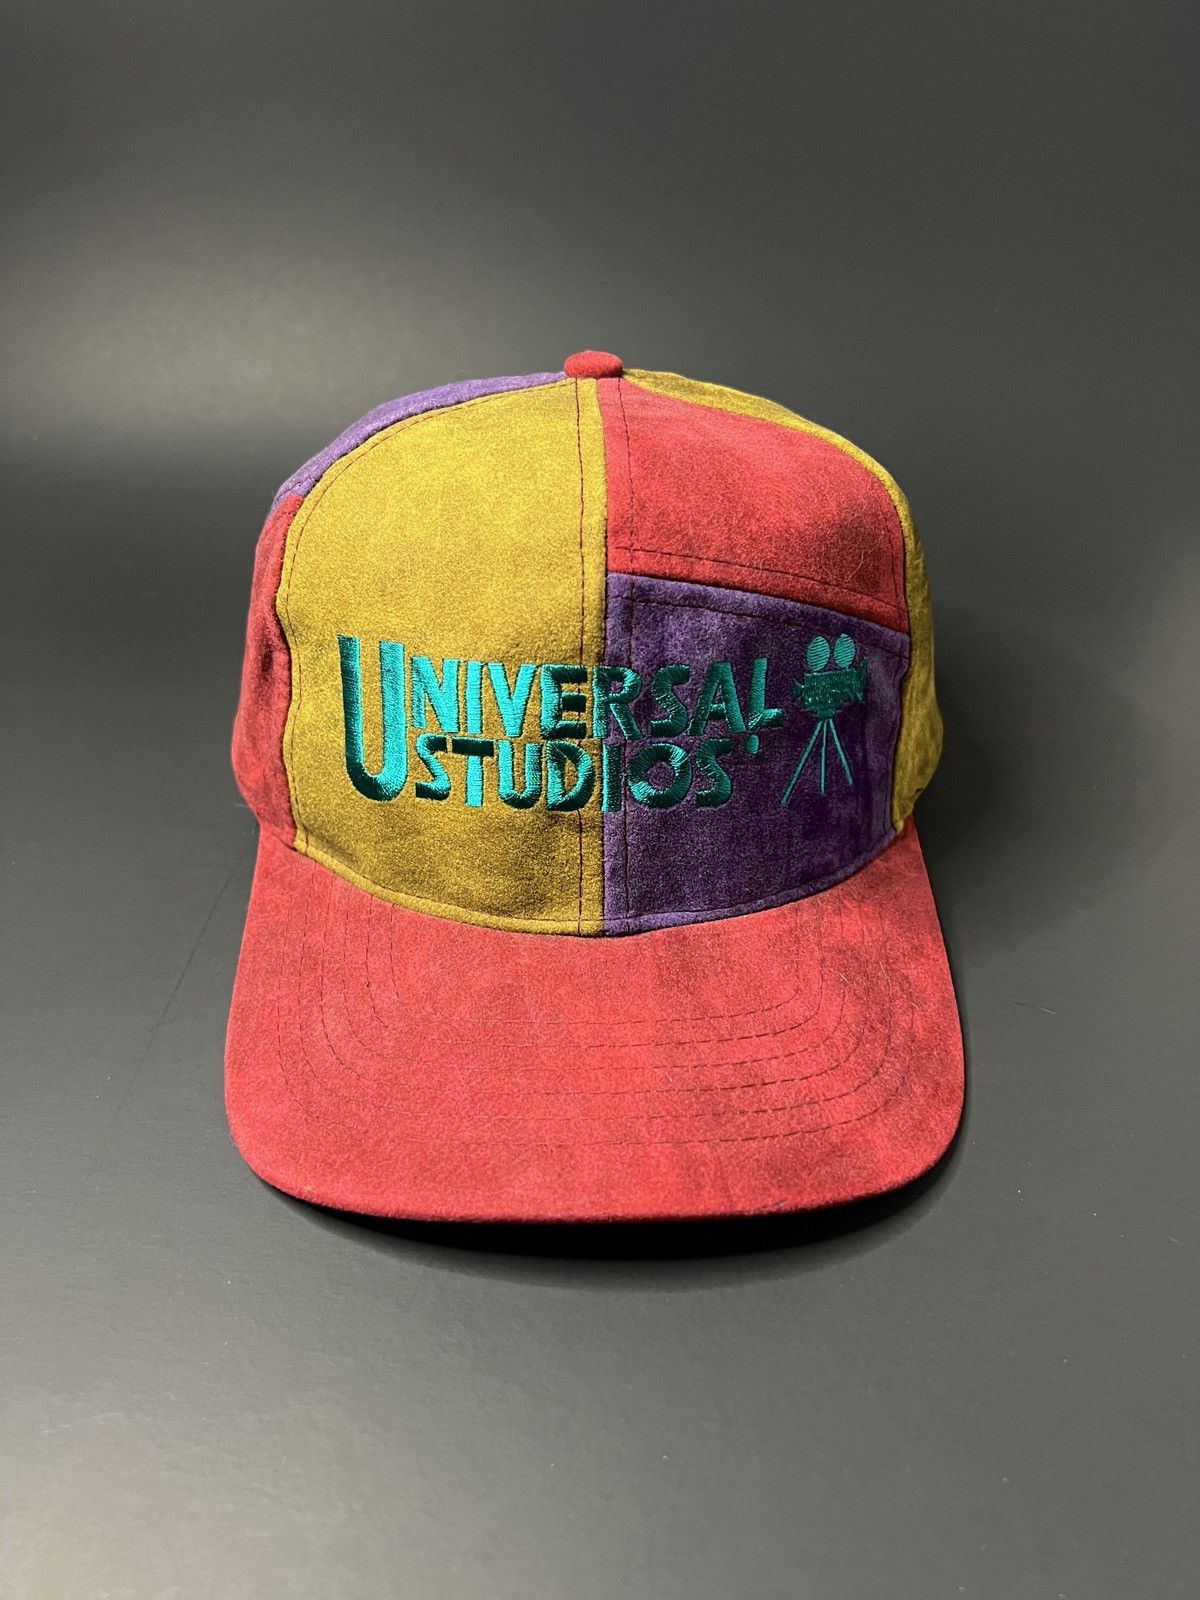 Vintage Vintage 90s Universal Studios Snapback Hat | Grailed